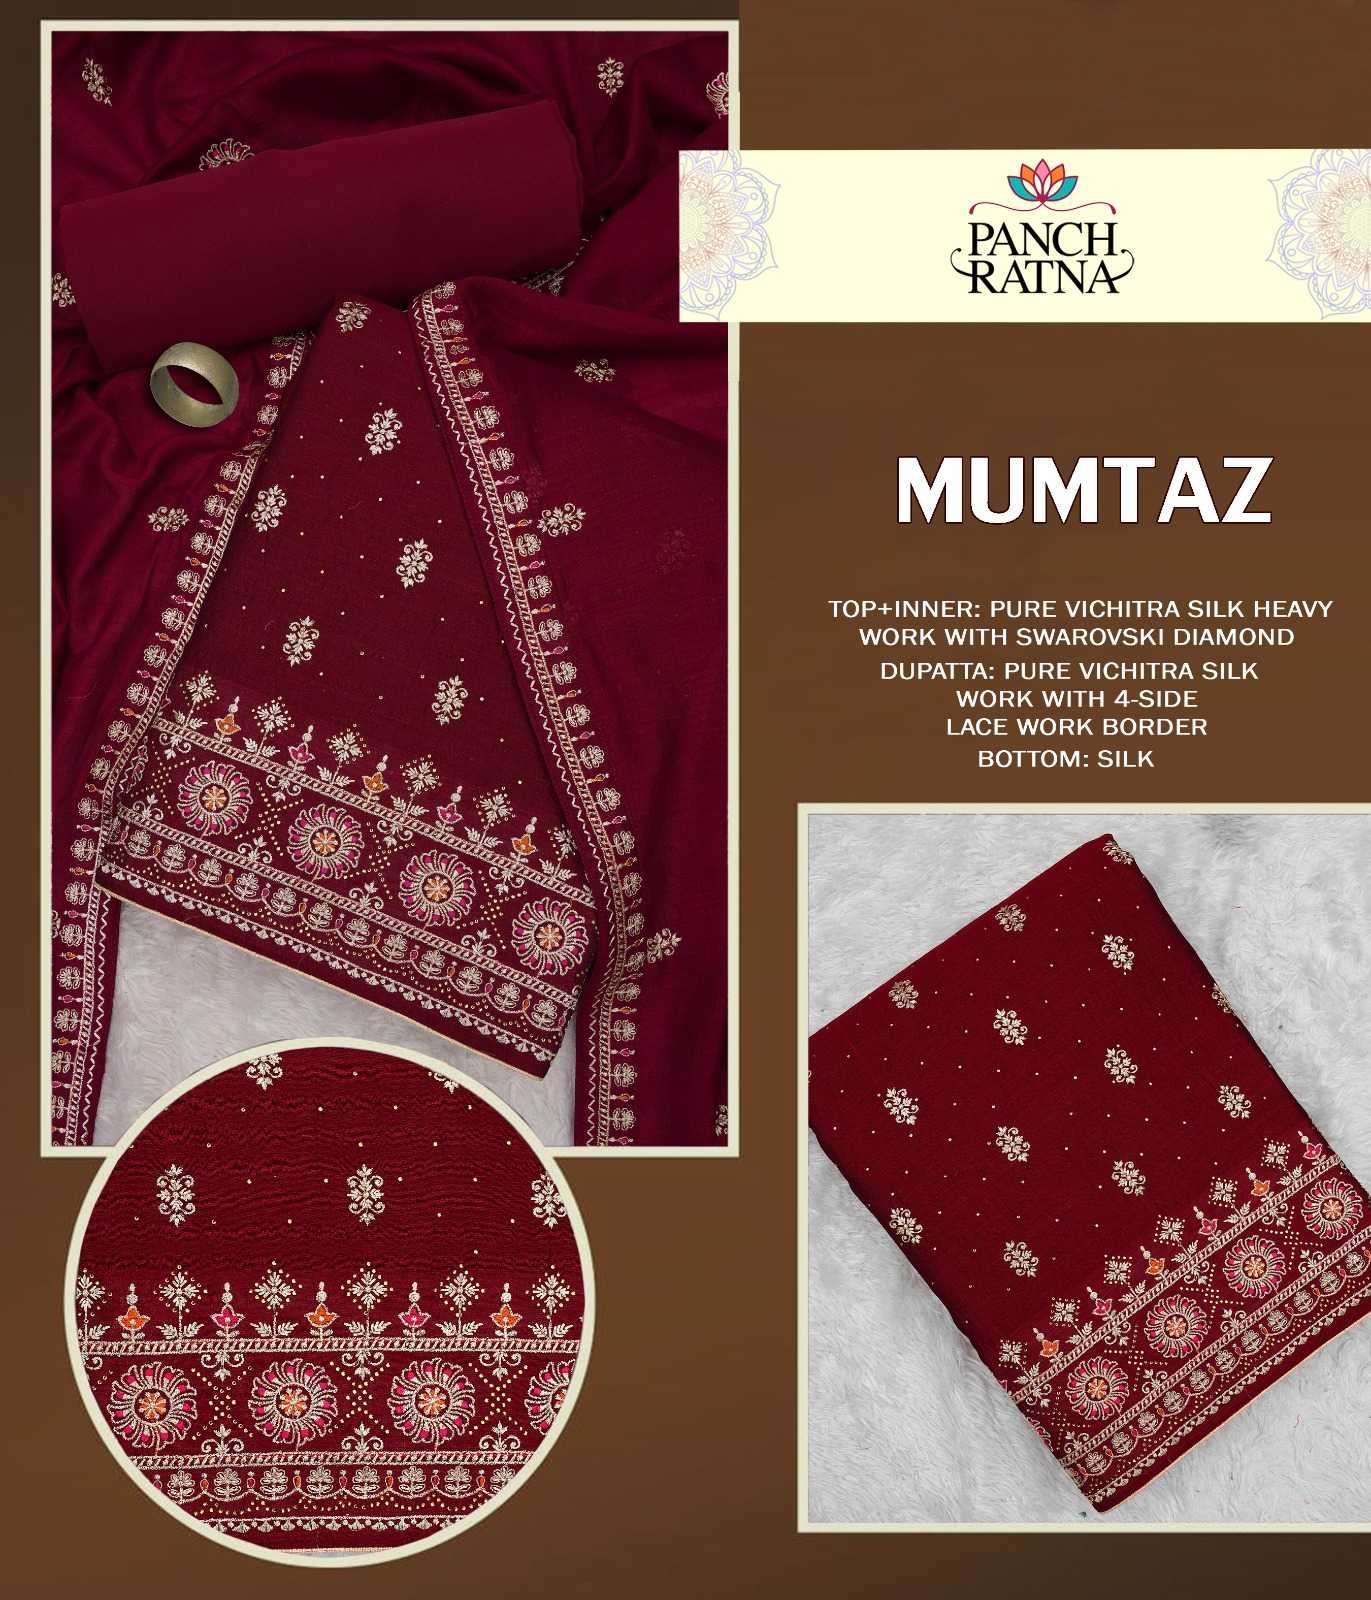 panch ratna mumtaz Pure Vichitra Silk Heavy Work With Swarovski Diamond suit